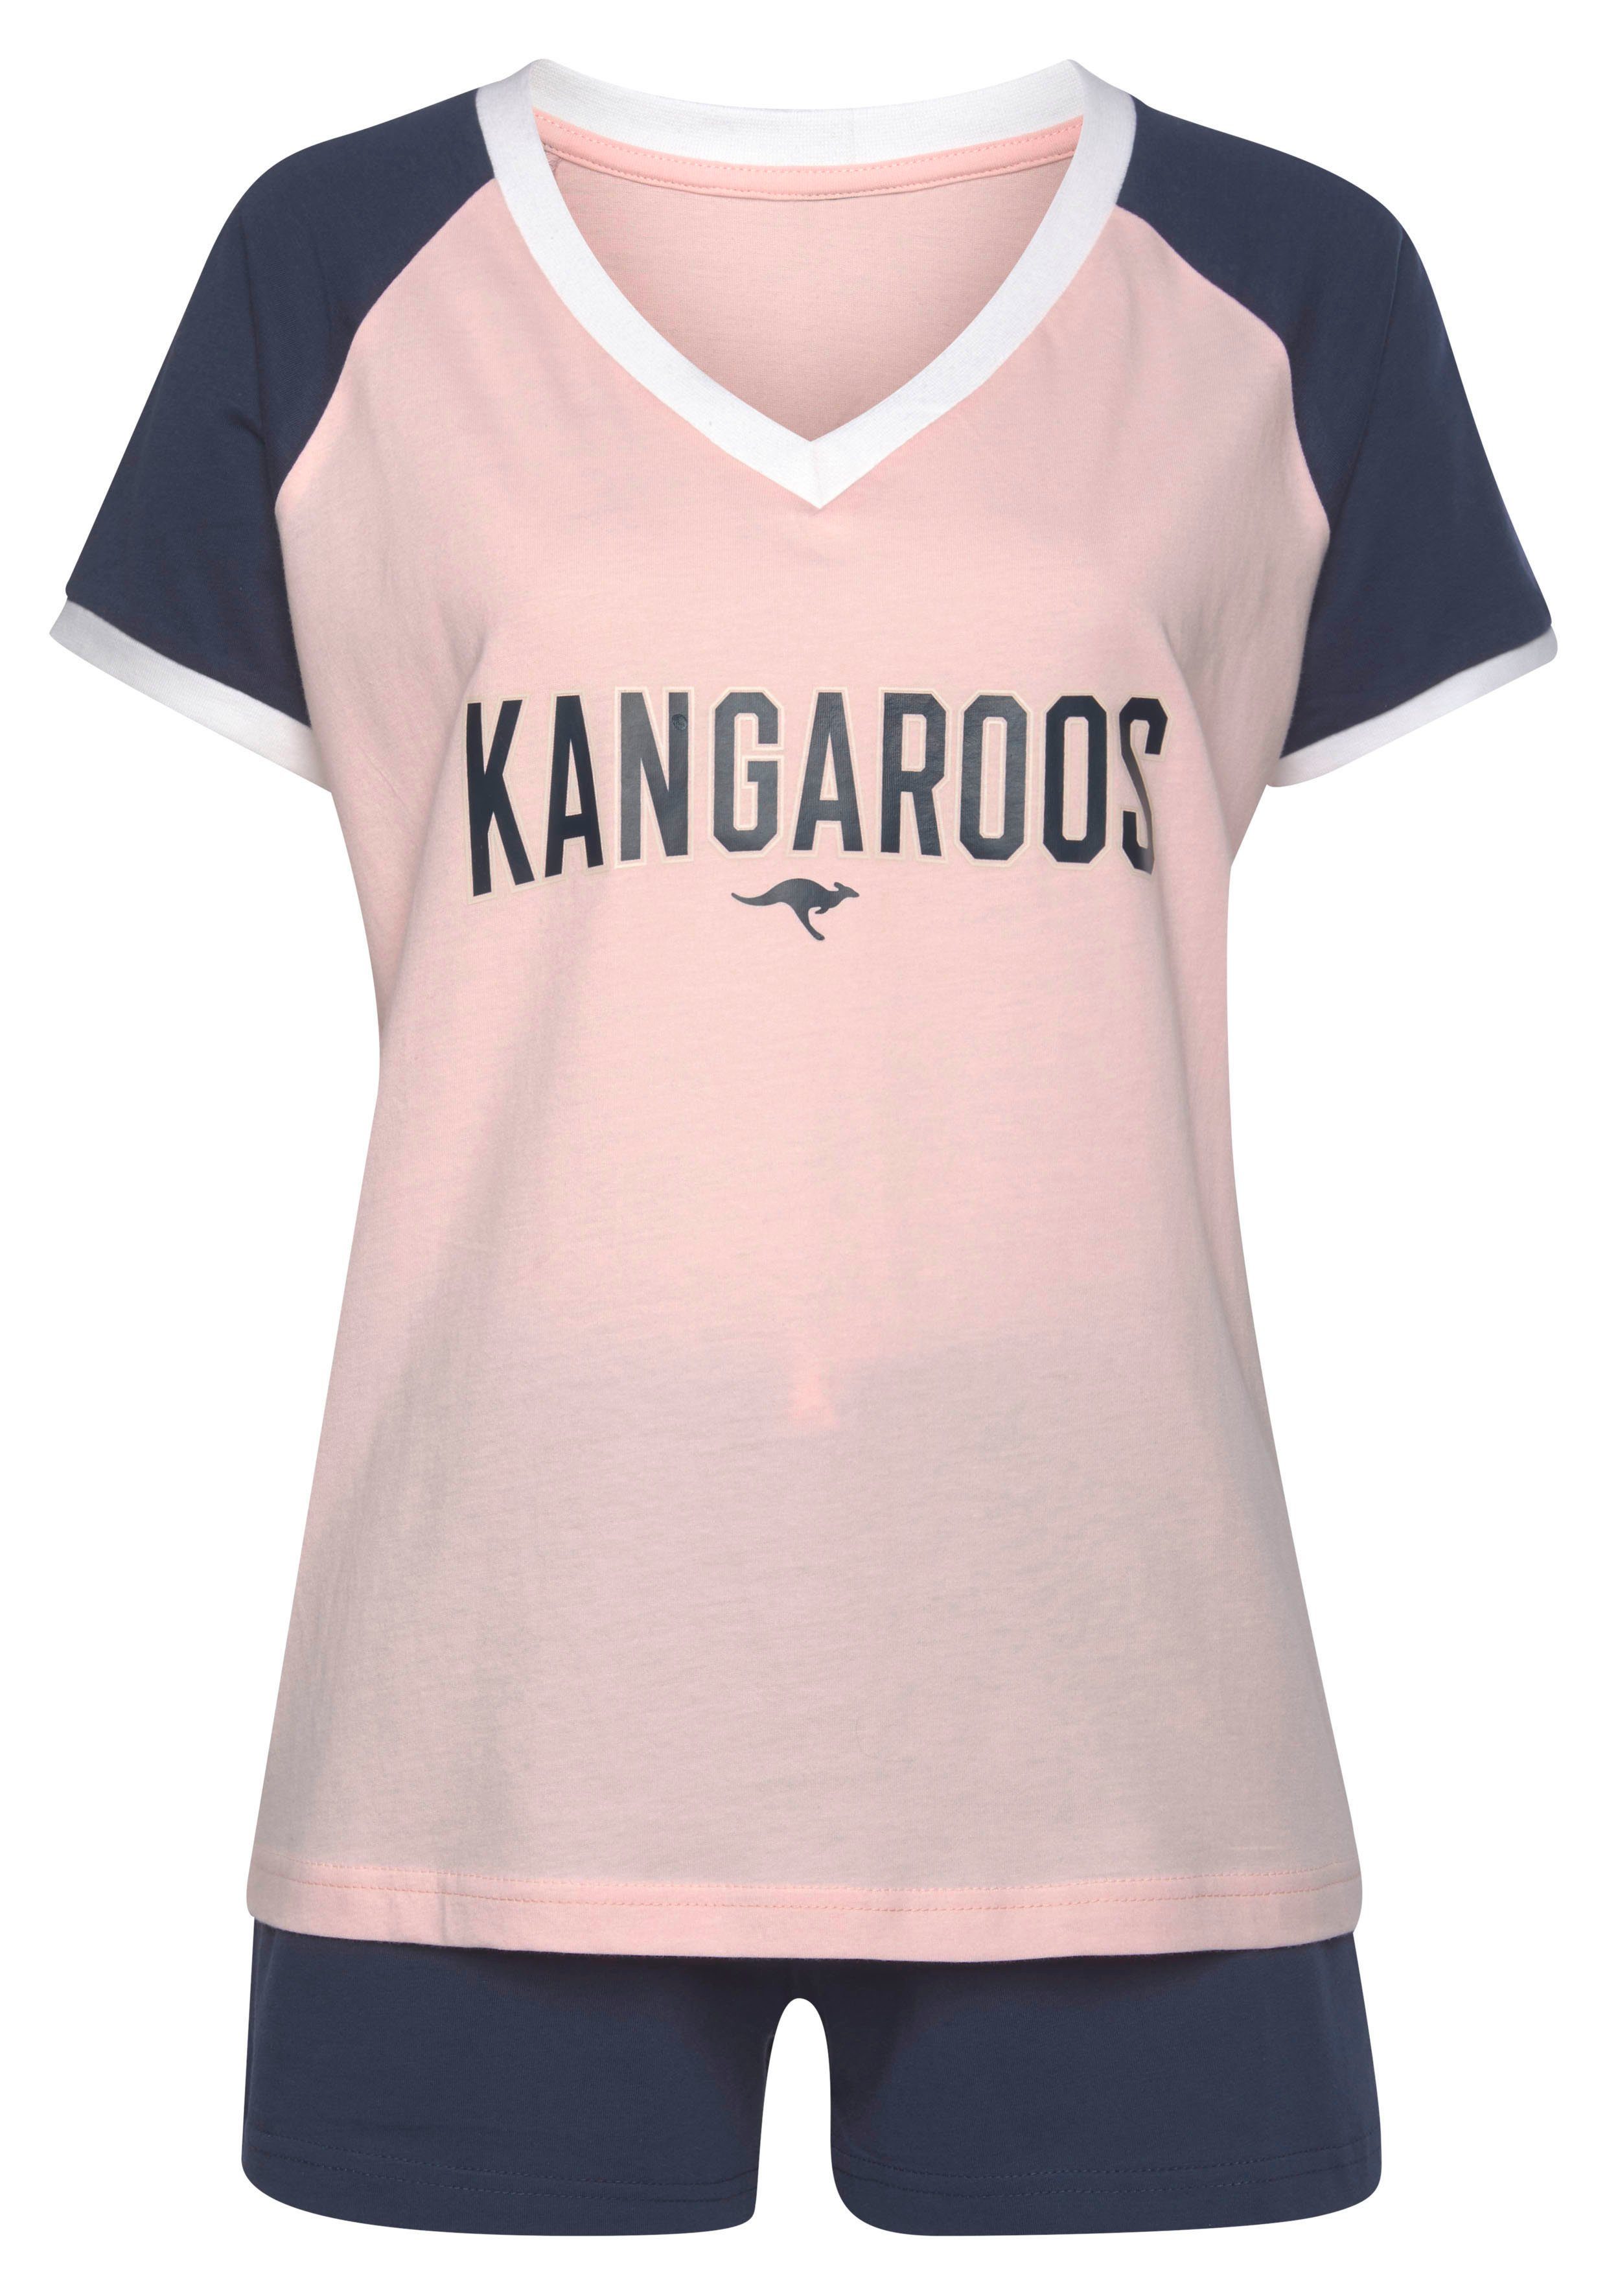 Raglanärmeln KangaROOS 1 tlg., rosa-dunkelblau kontrastfarbenen (2 Shorty mit Stück)